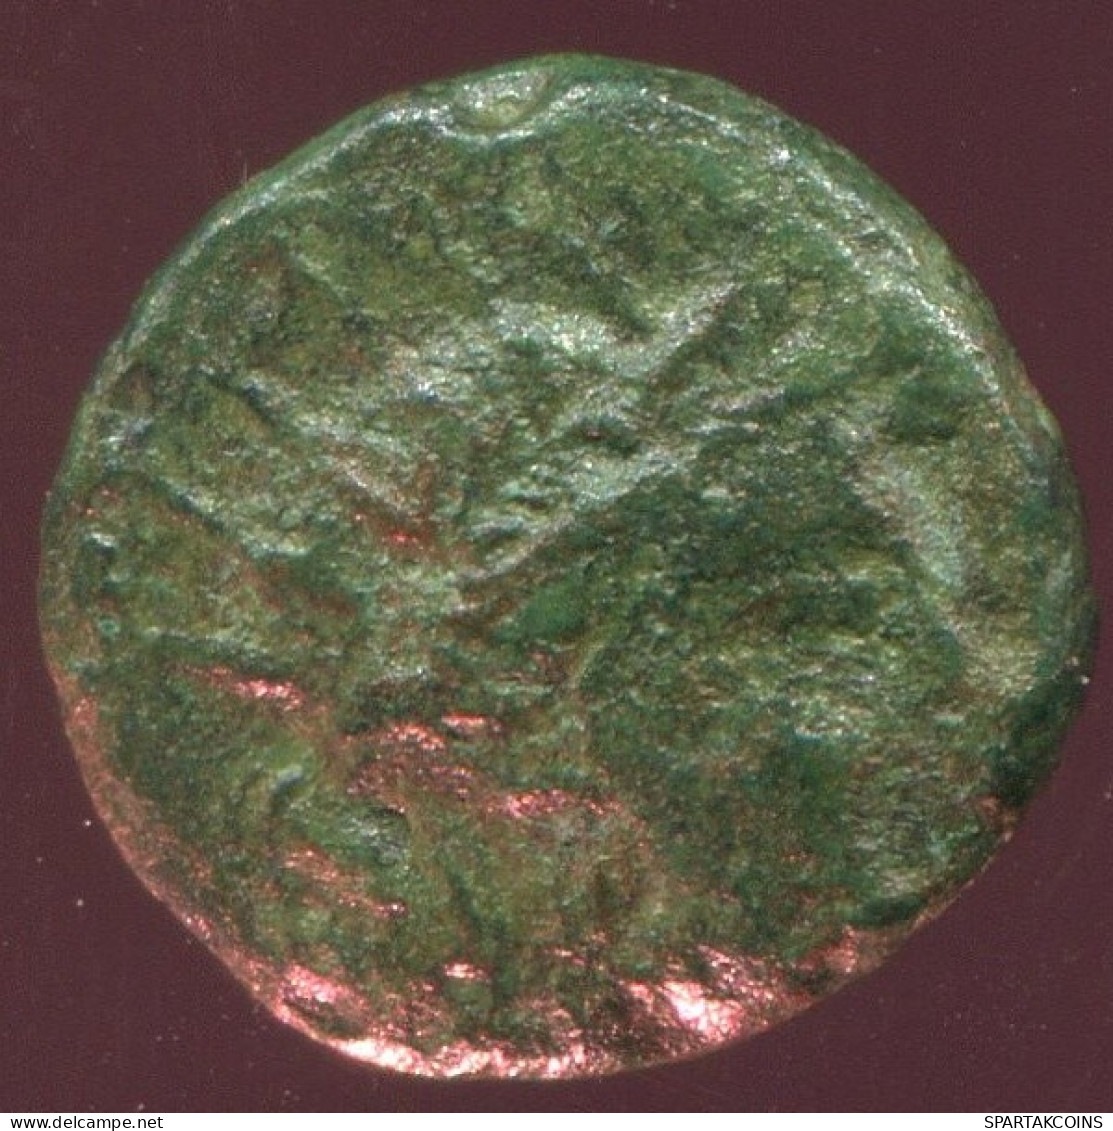 Ancient Authentic Original GREEK Coin 1.3g/12mm #ANT1653.10.U.A - Greek